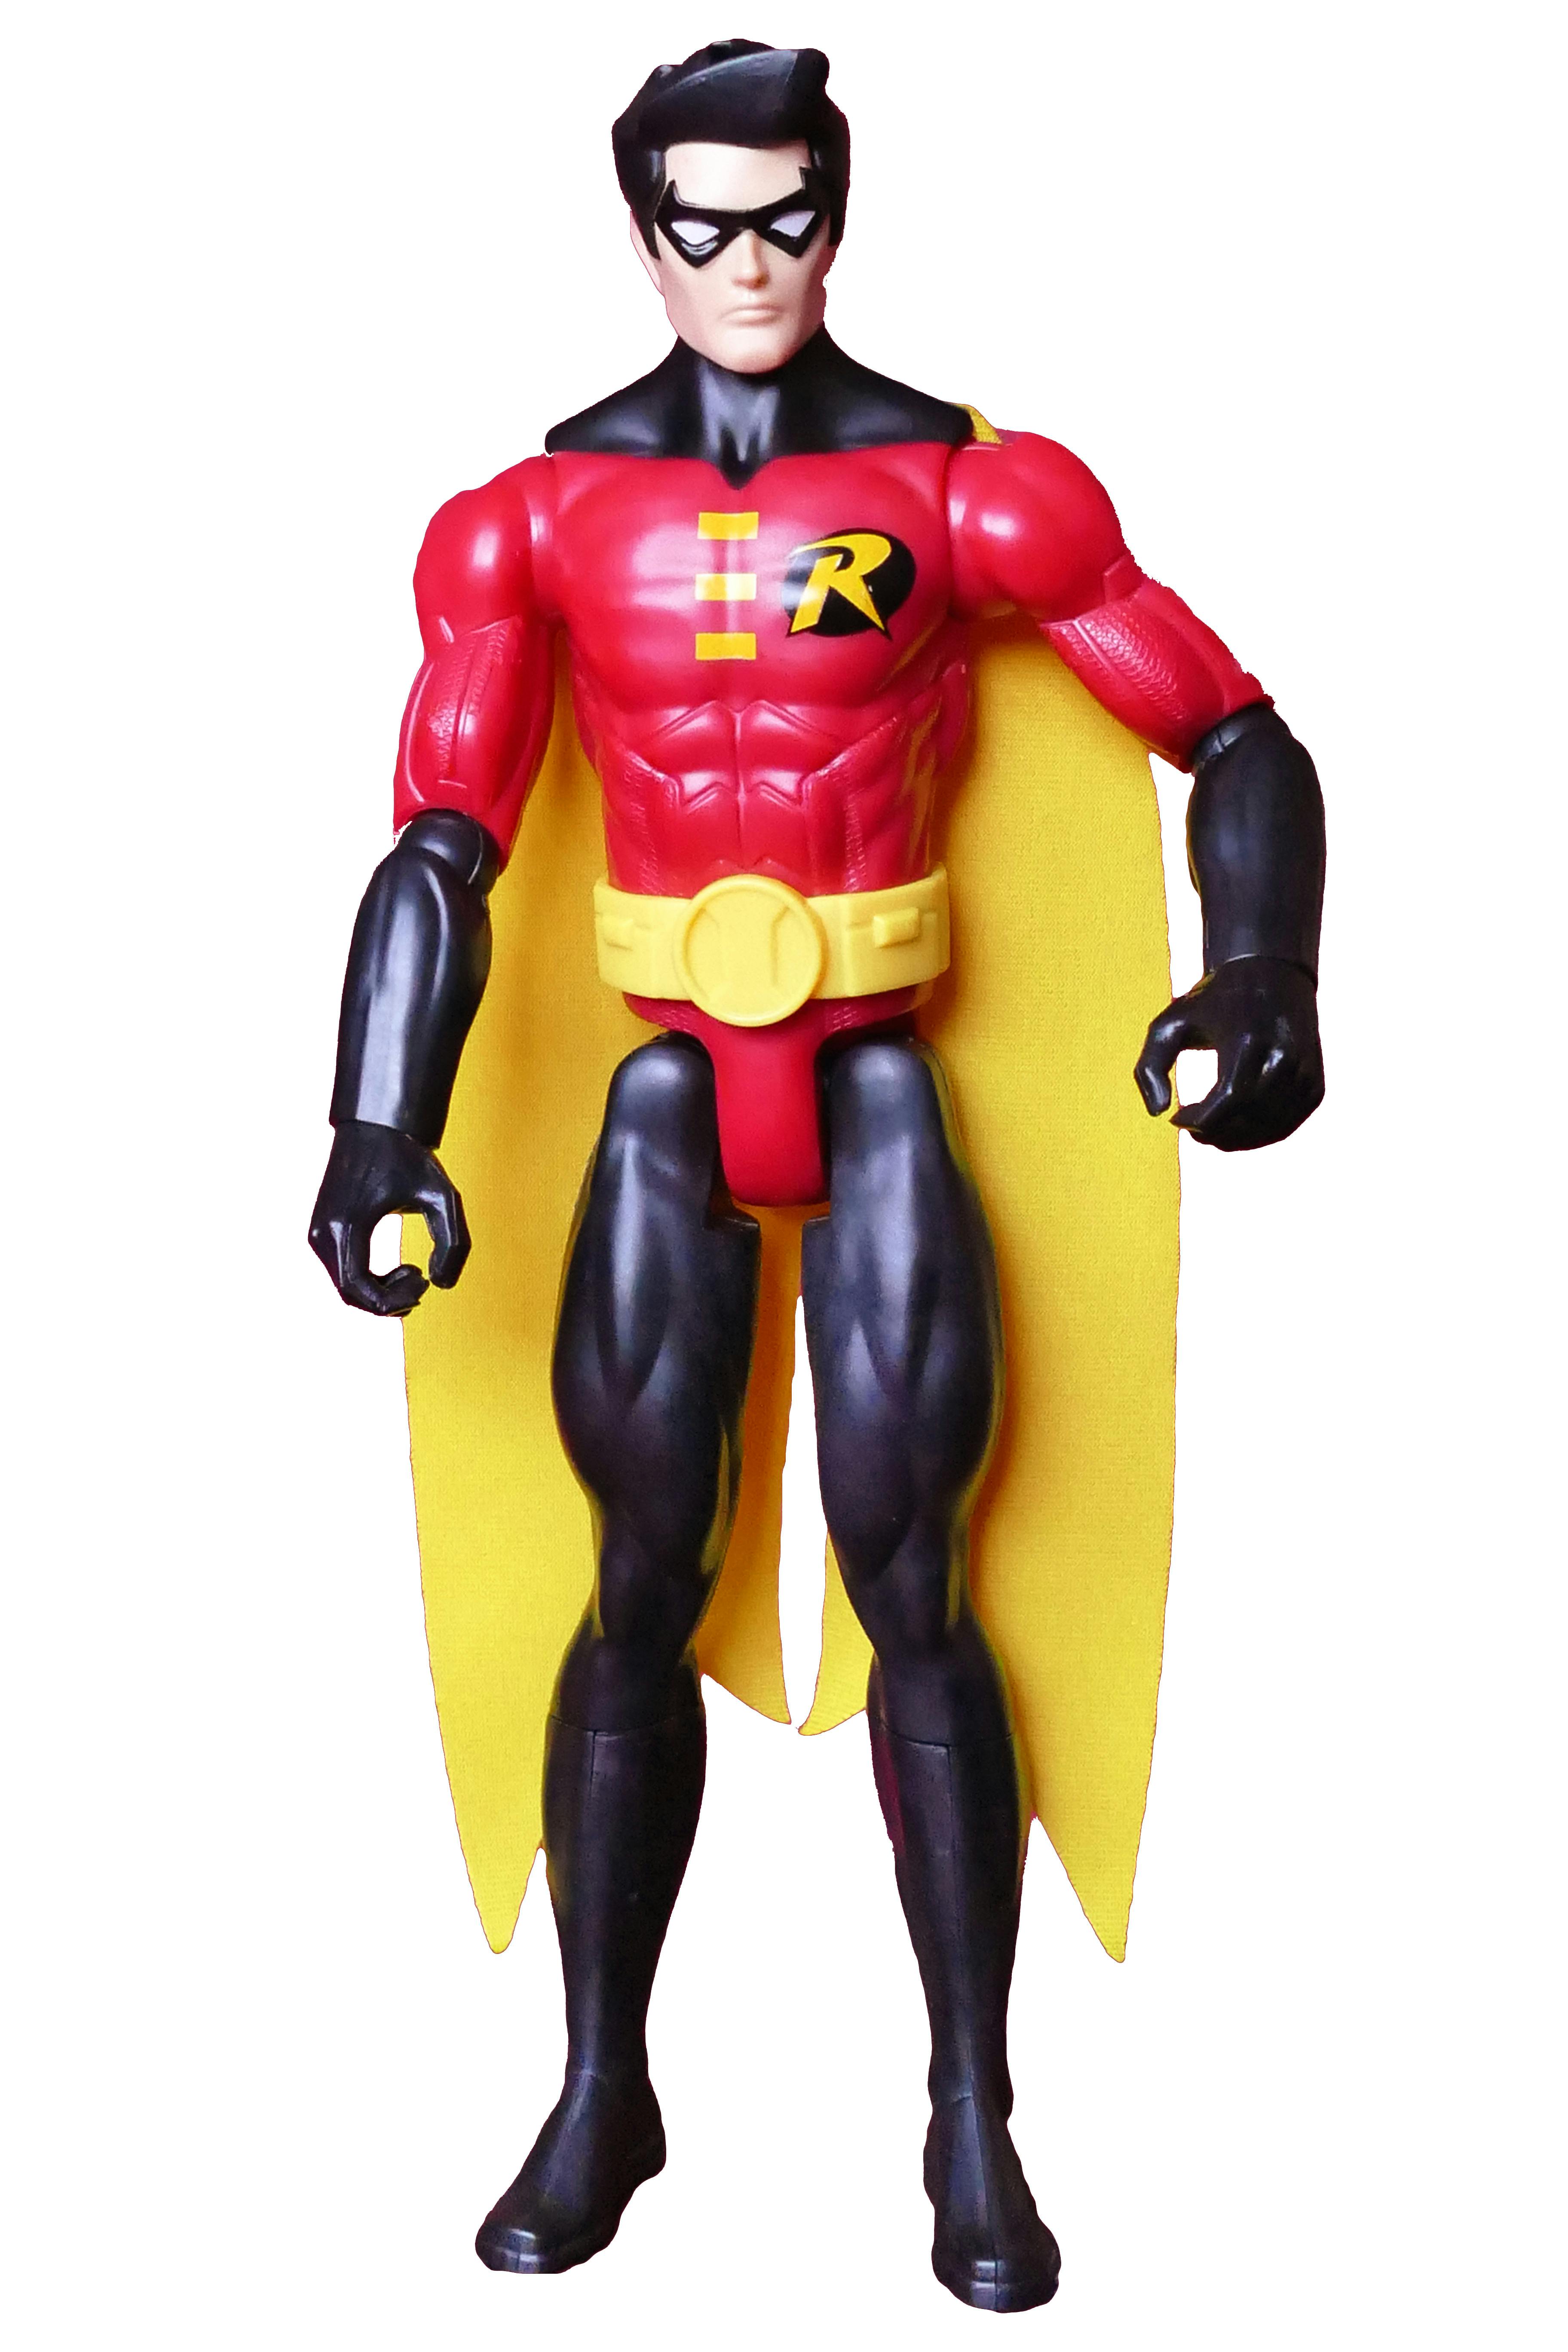 batman action yellow figure batman, toys action of Free figure, stock batman photo